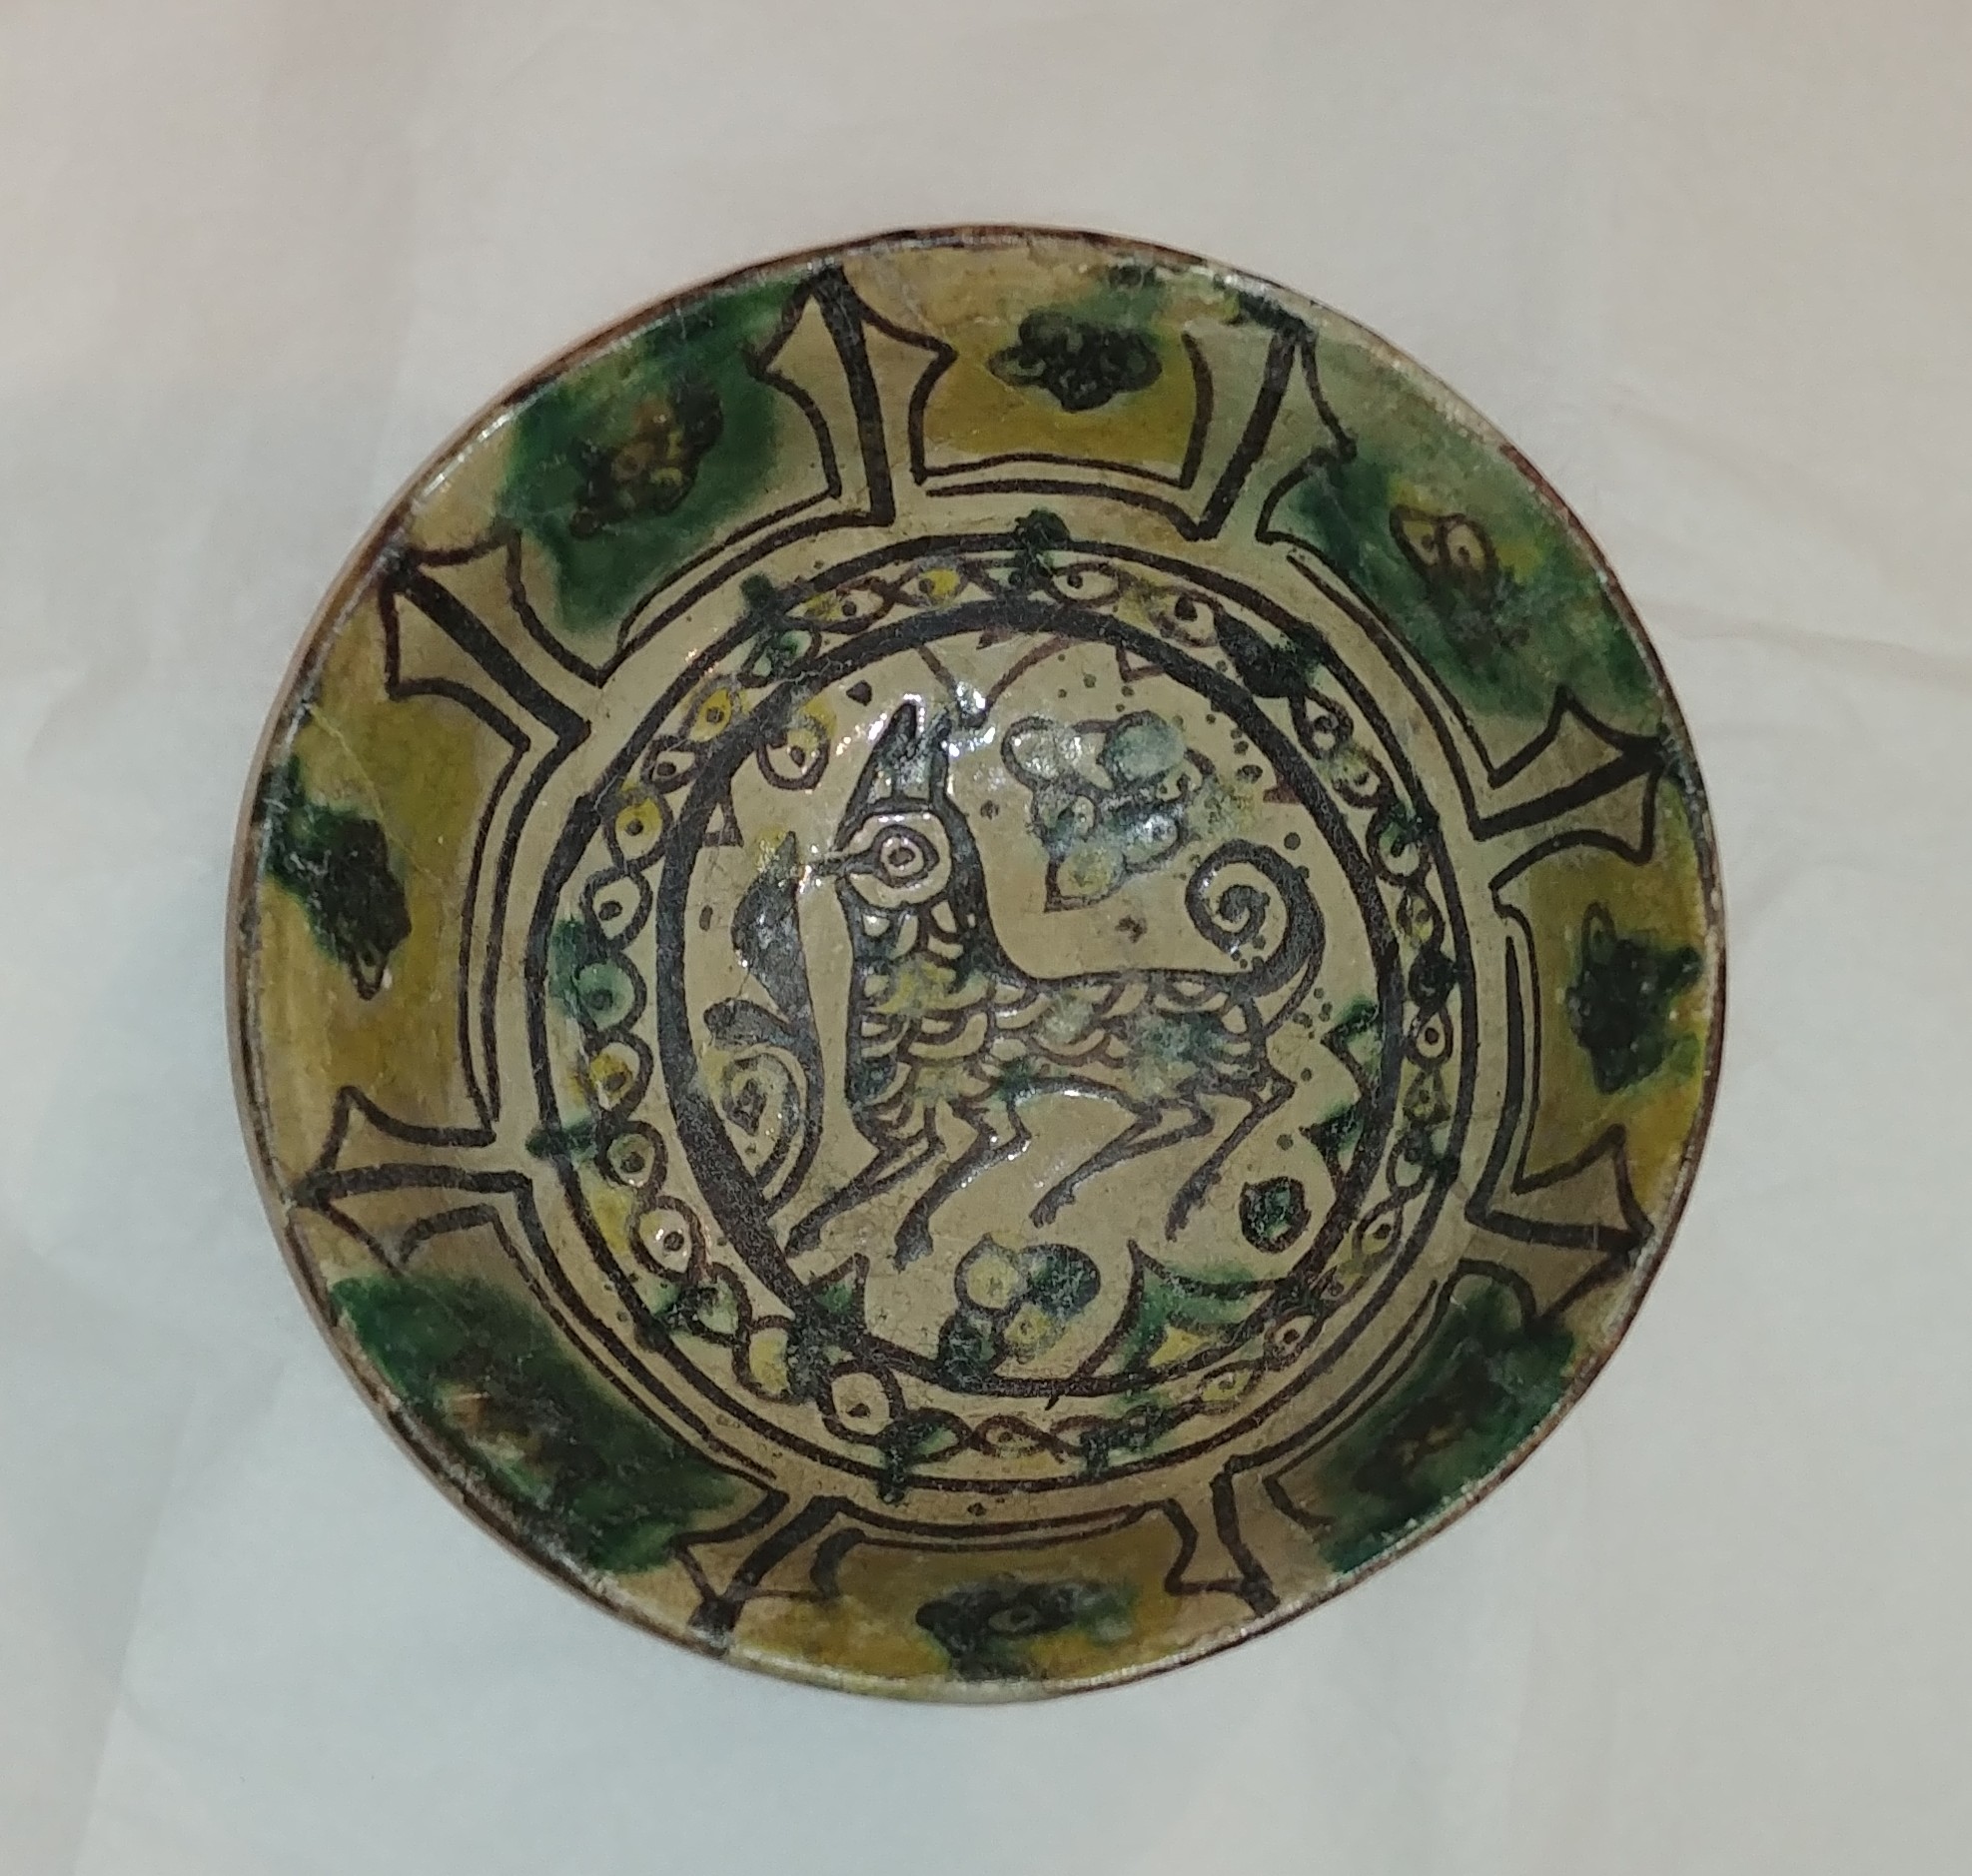 A Nishapur Bowl with Central Bird Figure, Iran 10th century AD